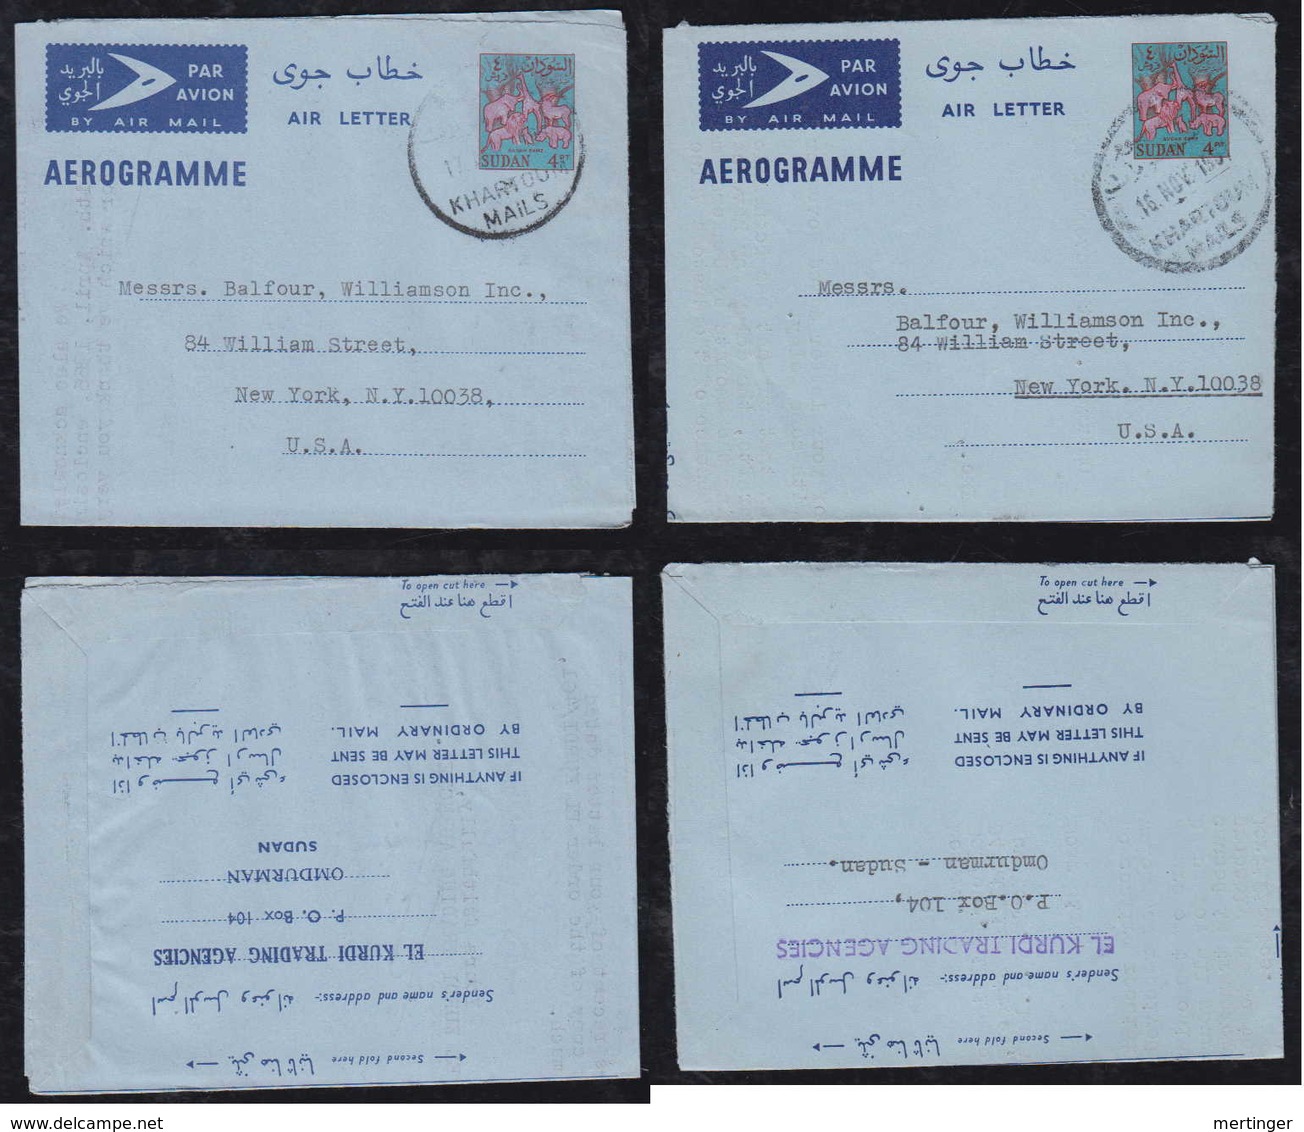 Sudan 1966 + 1967 2 Air Letter Aerogramme Stationery 2 Color Shades 4PT Animals KHARTOUM To NEW YORK USA - Sudan (1954-...)